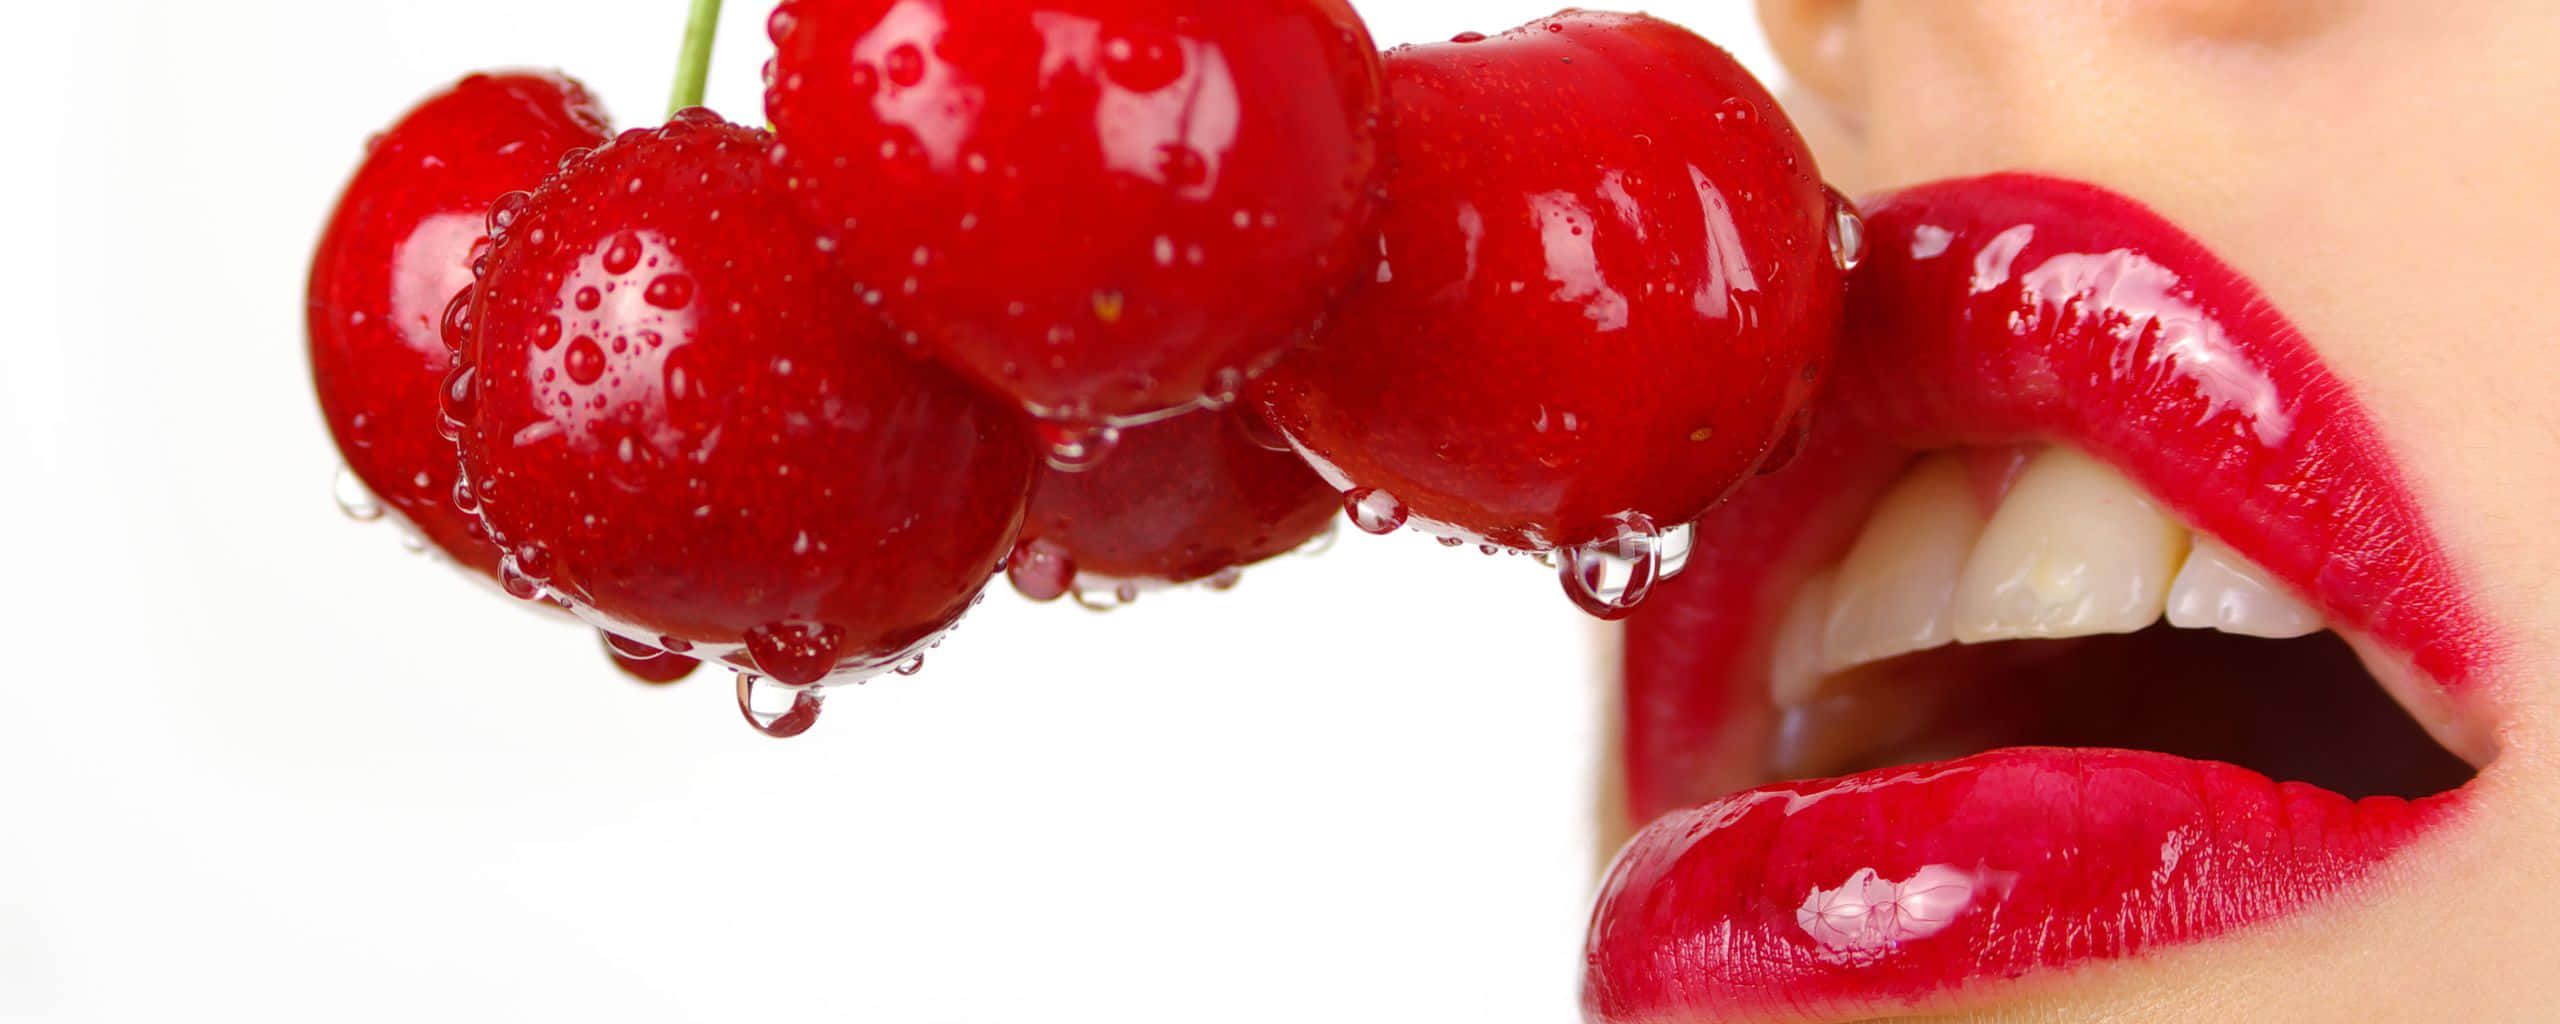 Fresh and Juicy Red Cherries